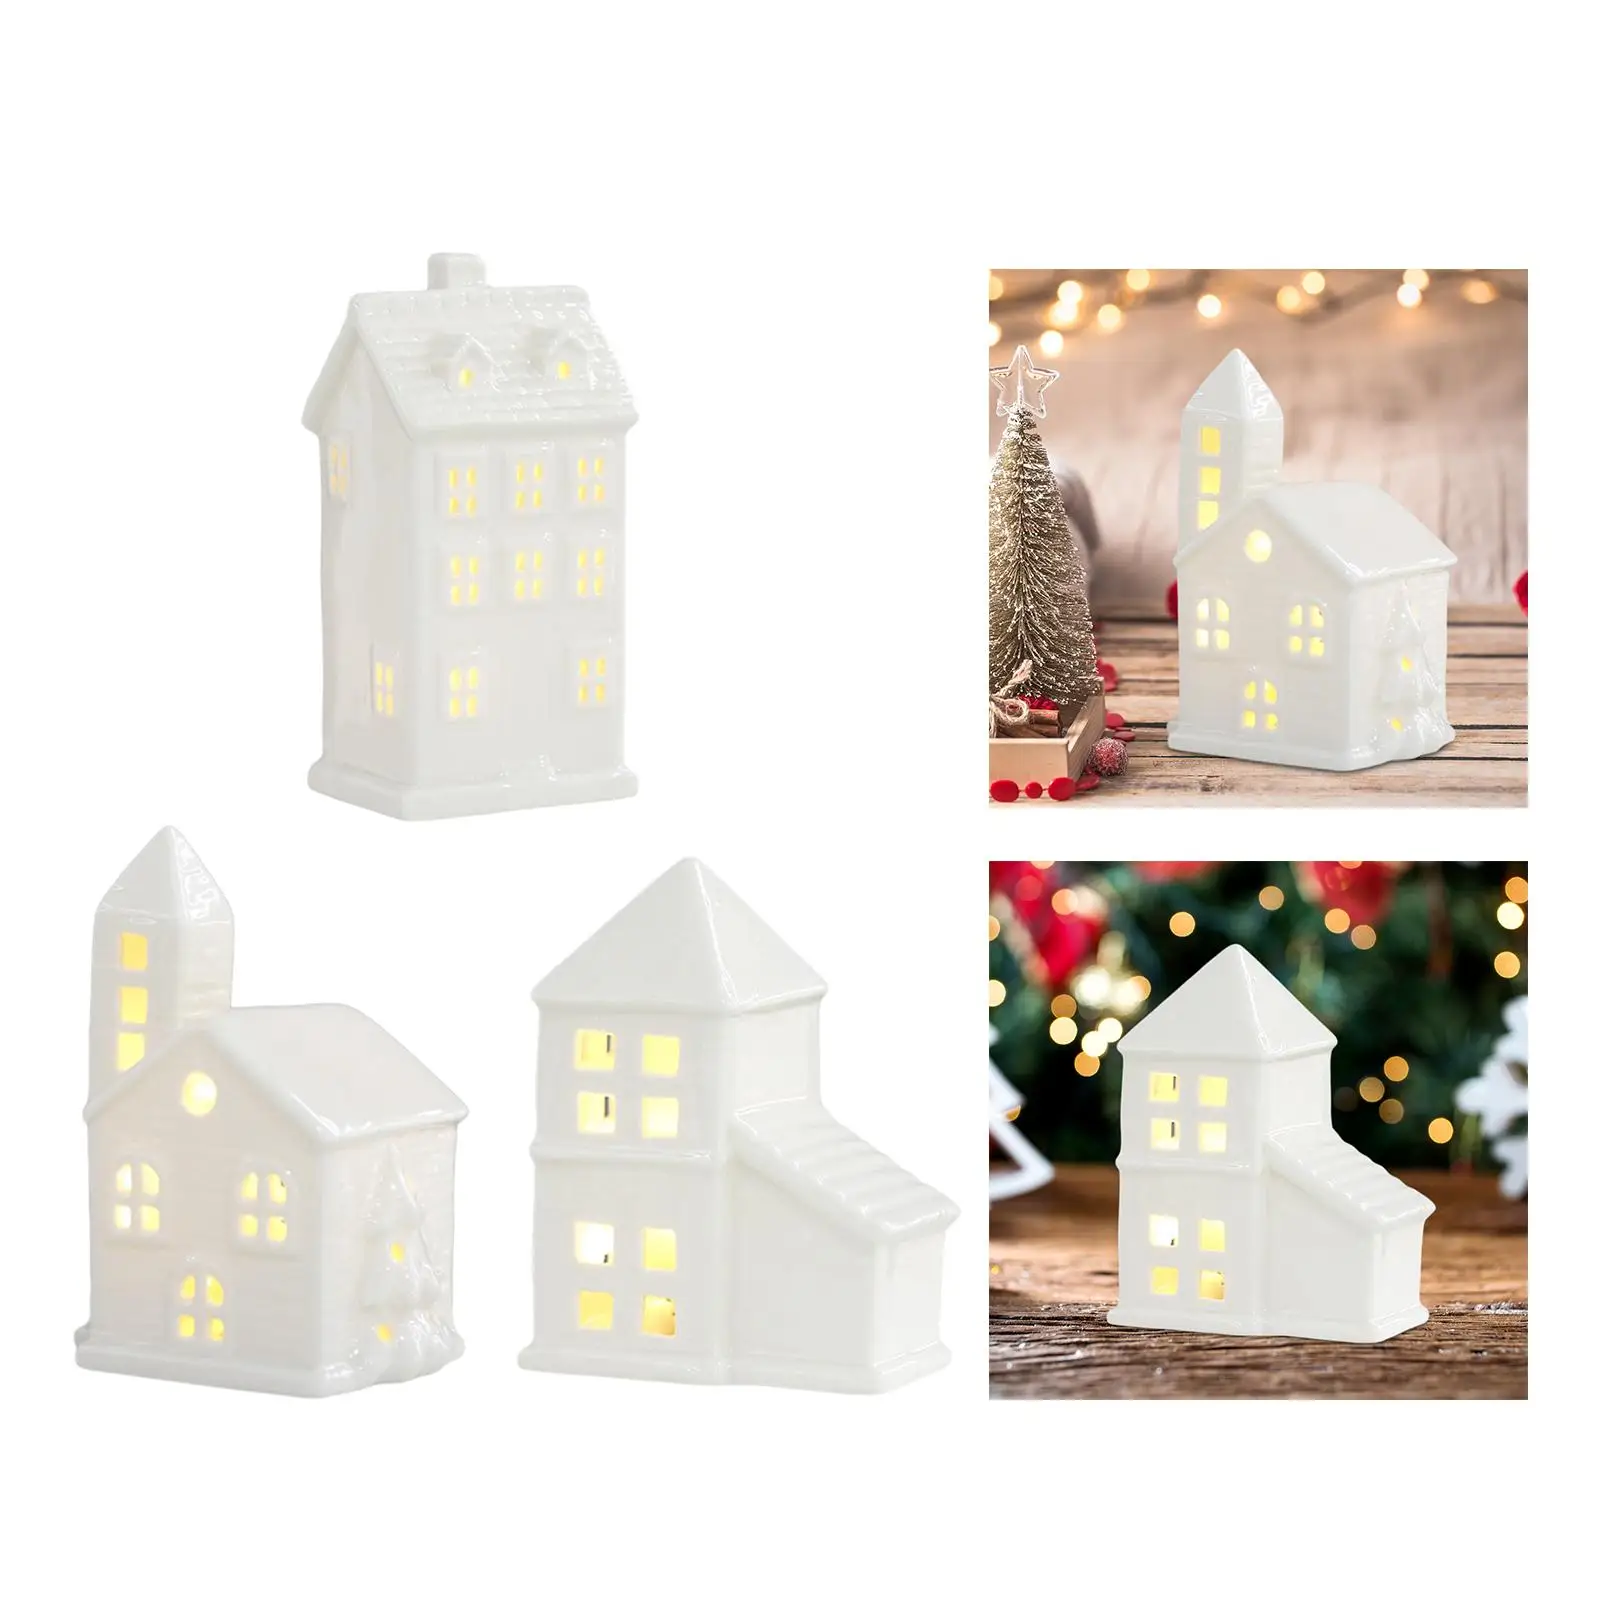 Lighted LED Christmas Village House Decoration Building Figurine Statue, Miniature Landscape for Holiday, Living Room, Indoor